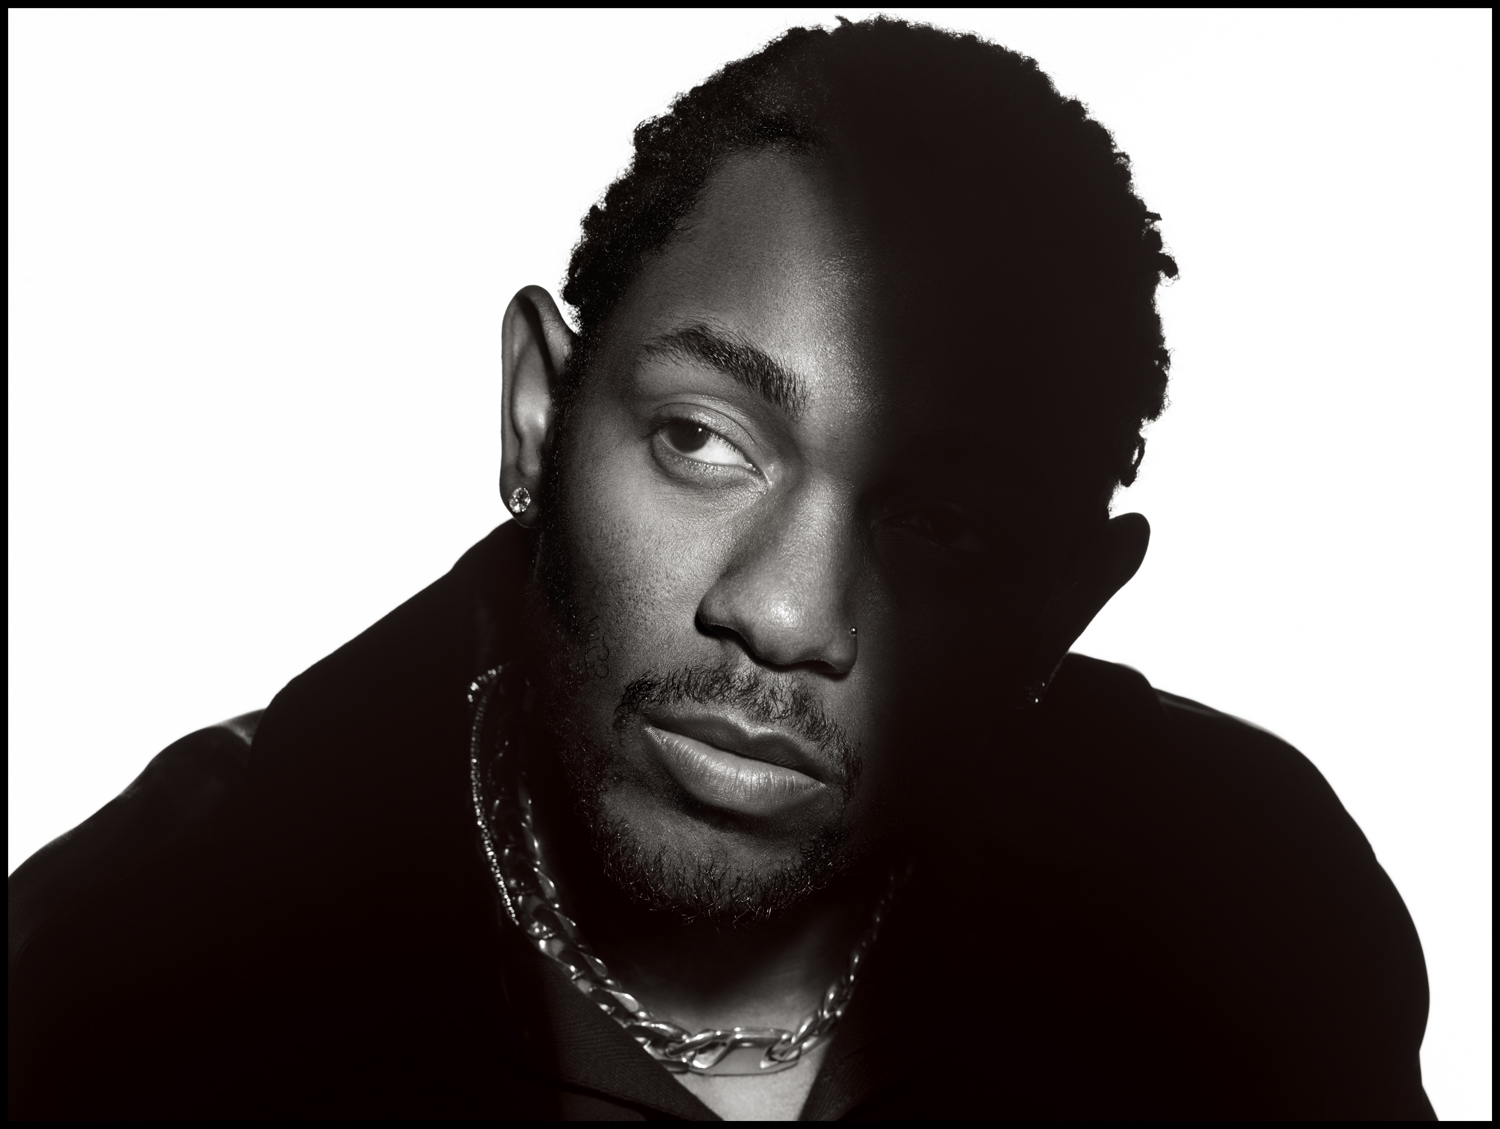 Kendrick Lamar, New York, NY, 2017 photograph by Mark Seliger